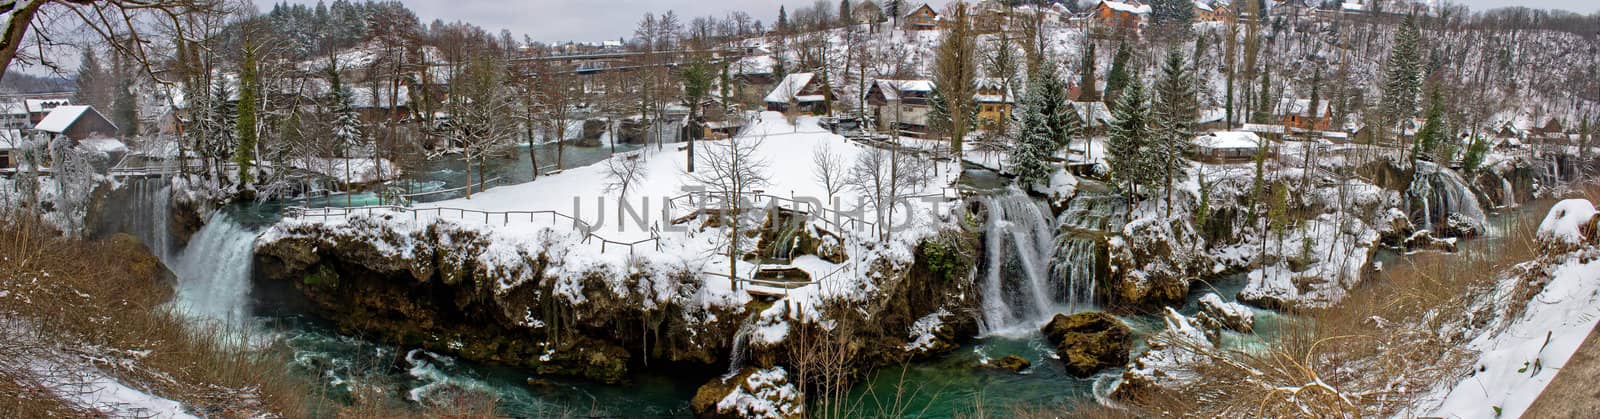 Rastoke waterfalls winter panorama, Croatia by xbrchx